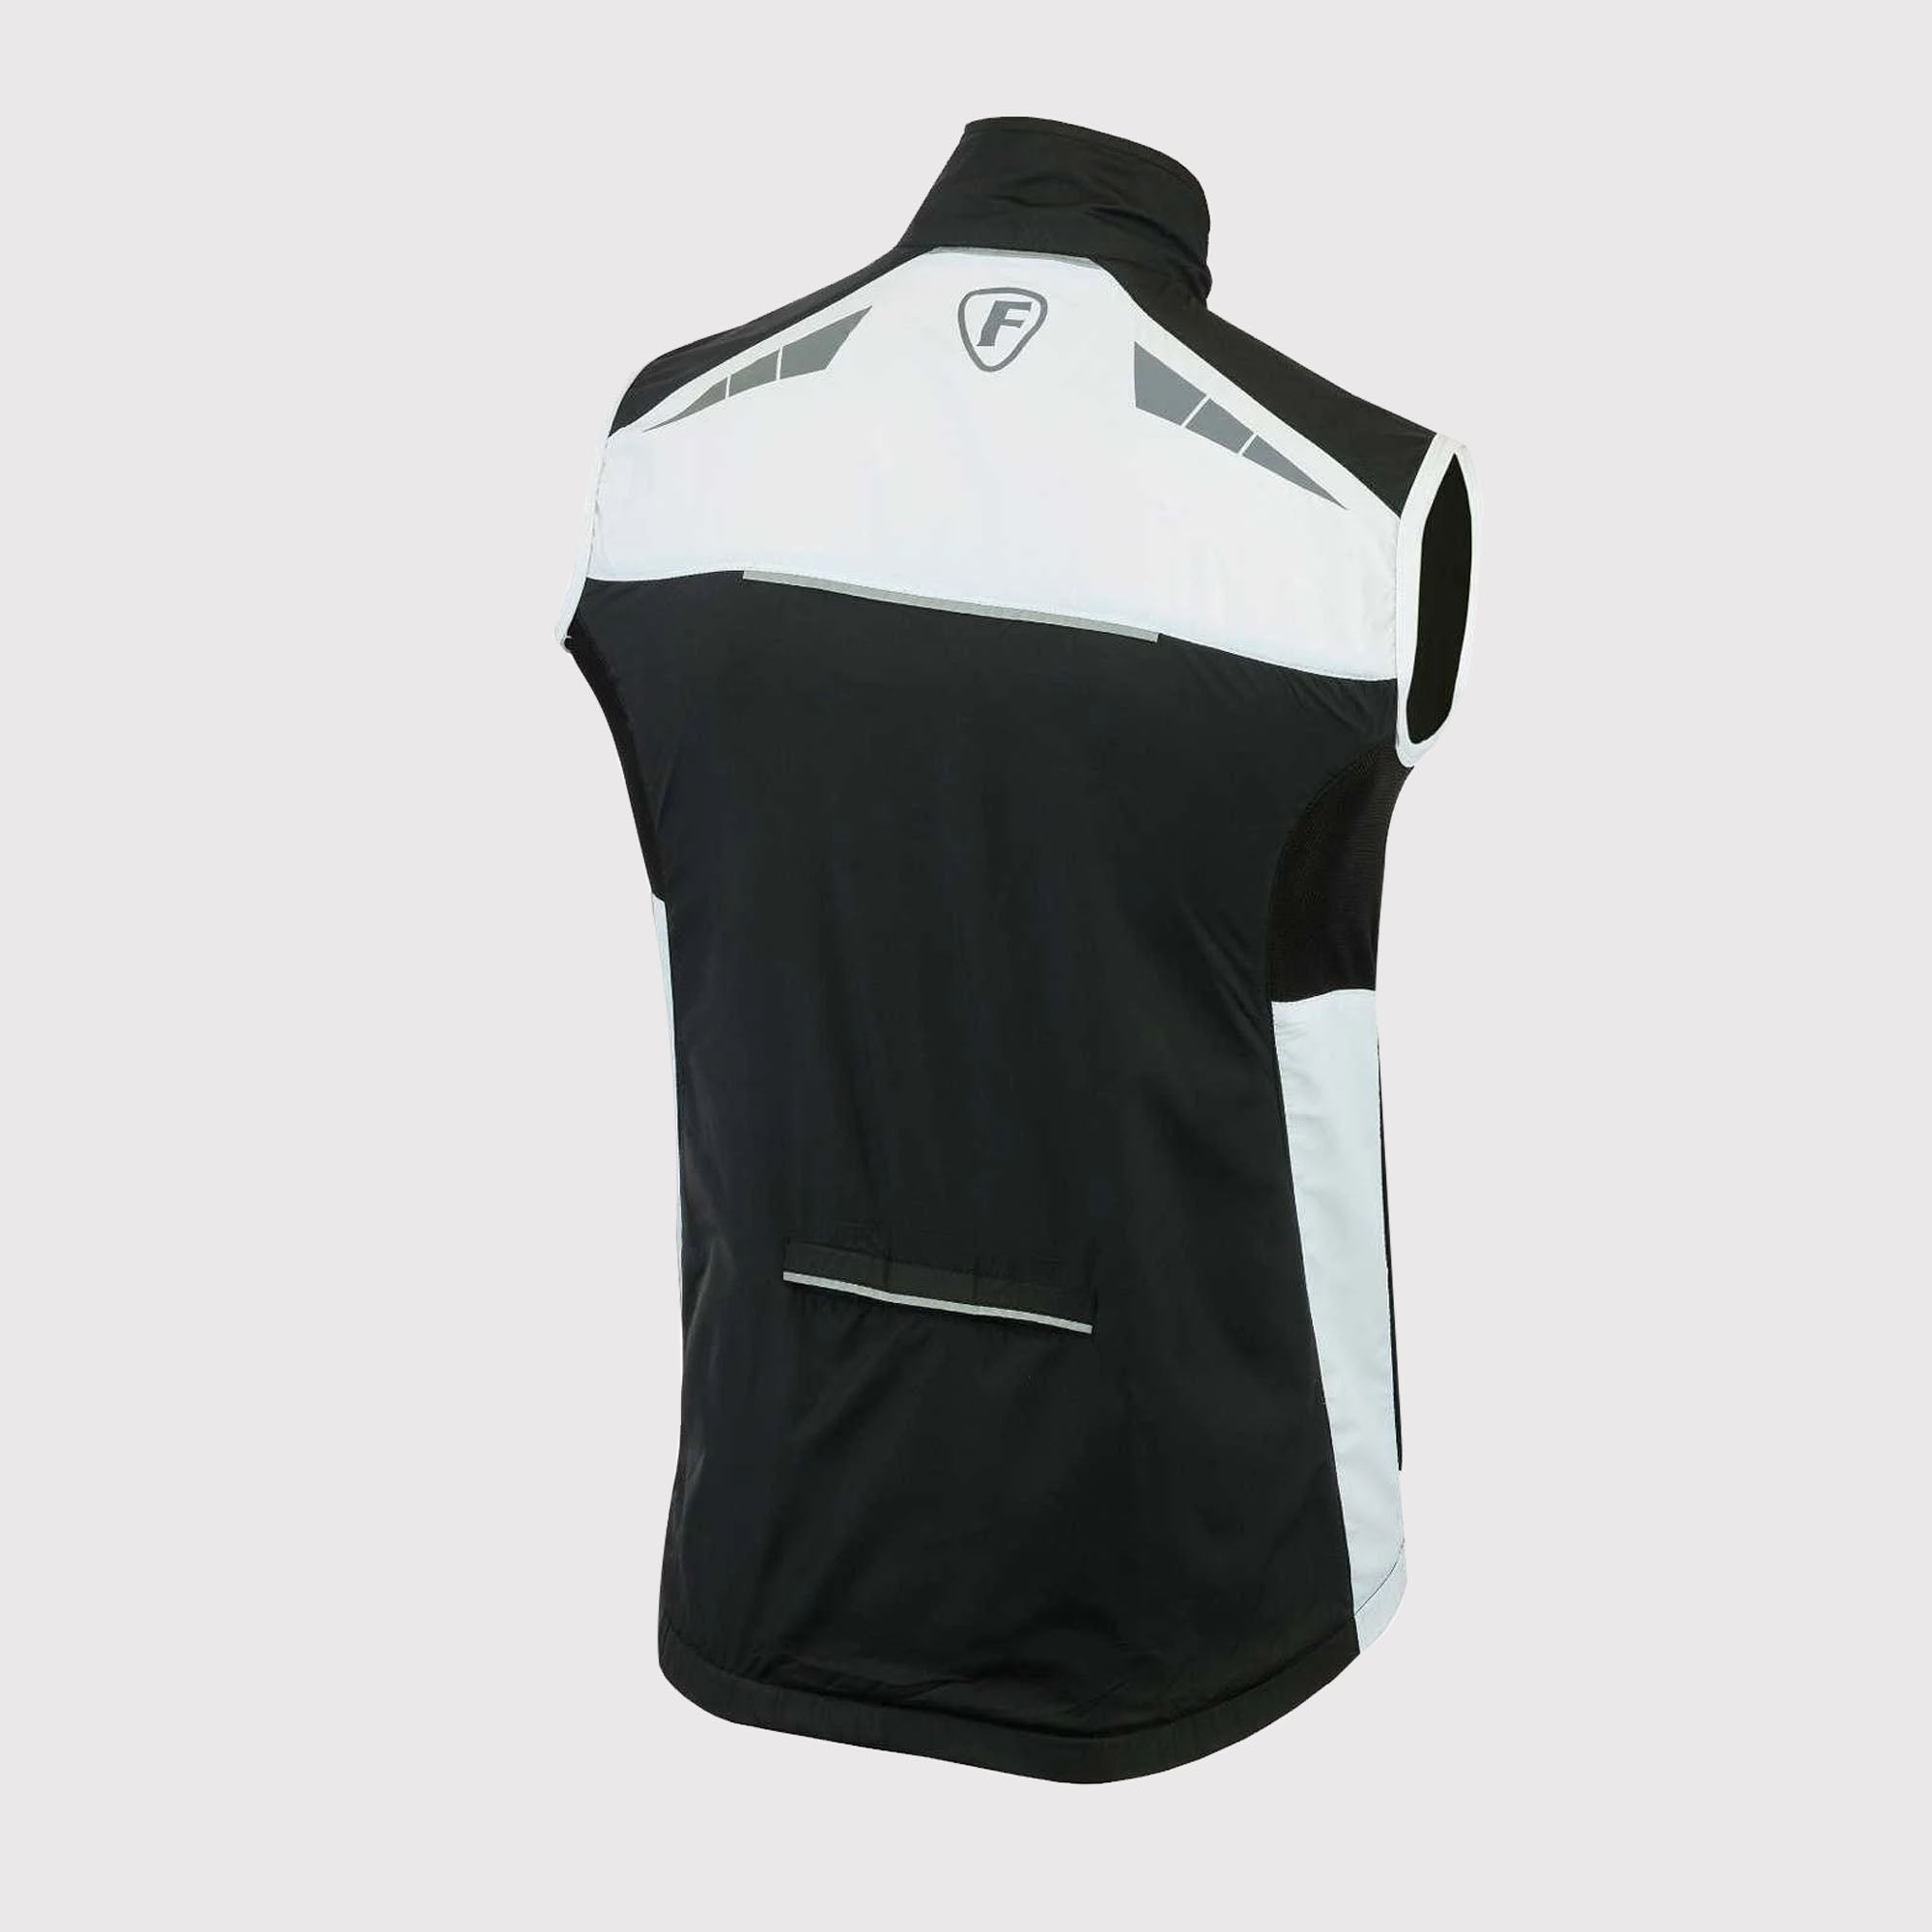 Fdx Men's Black Cycling Gilet Sleeveless Vest for Winter Clothing Hi-Viz Refectors, Lightweight, Windproof, Waterproof & Pockets - Dart